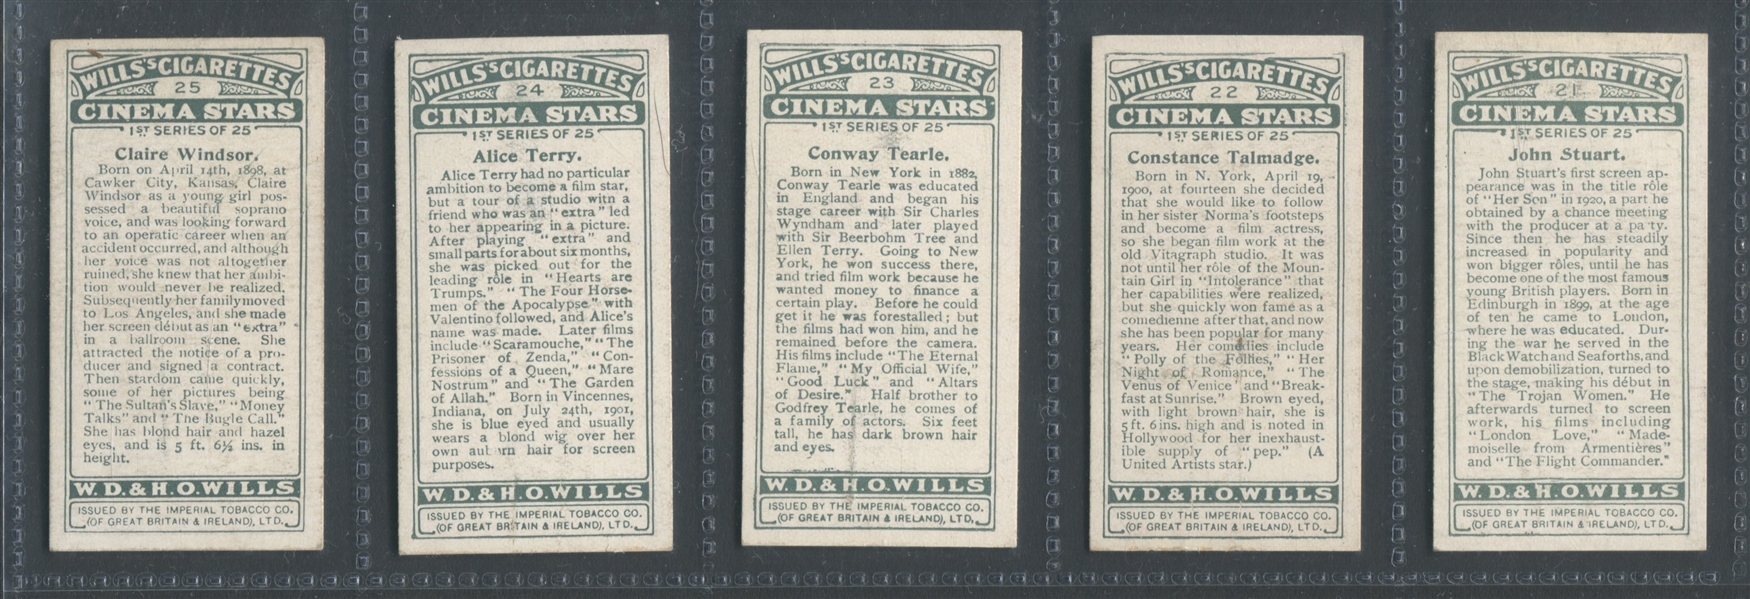 1928 Wills Cinema Stars - 1st Series Complete Set (25) - Featuring William Boyd, Tom Mix